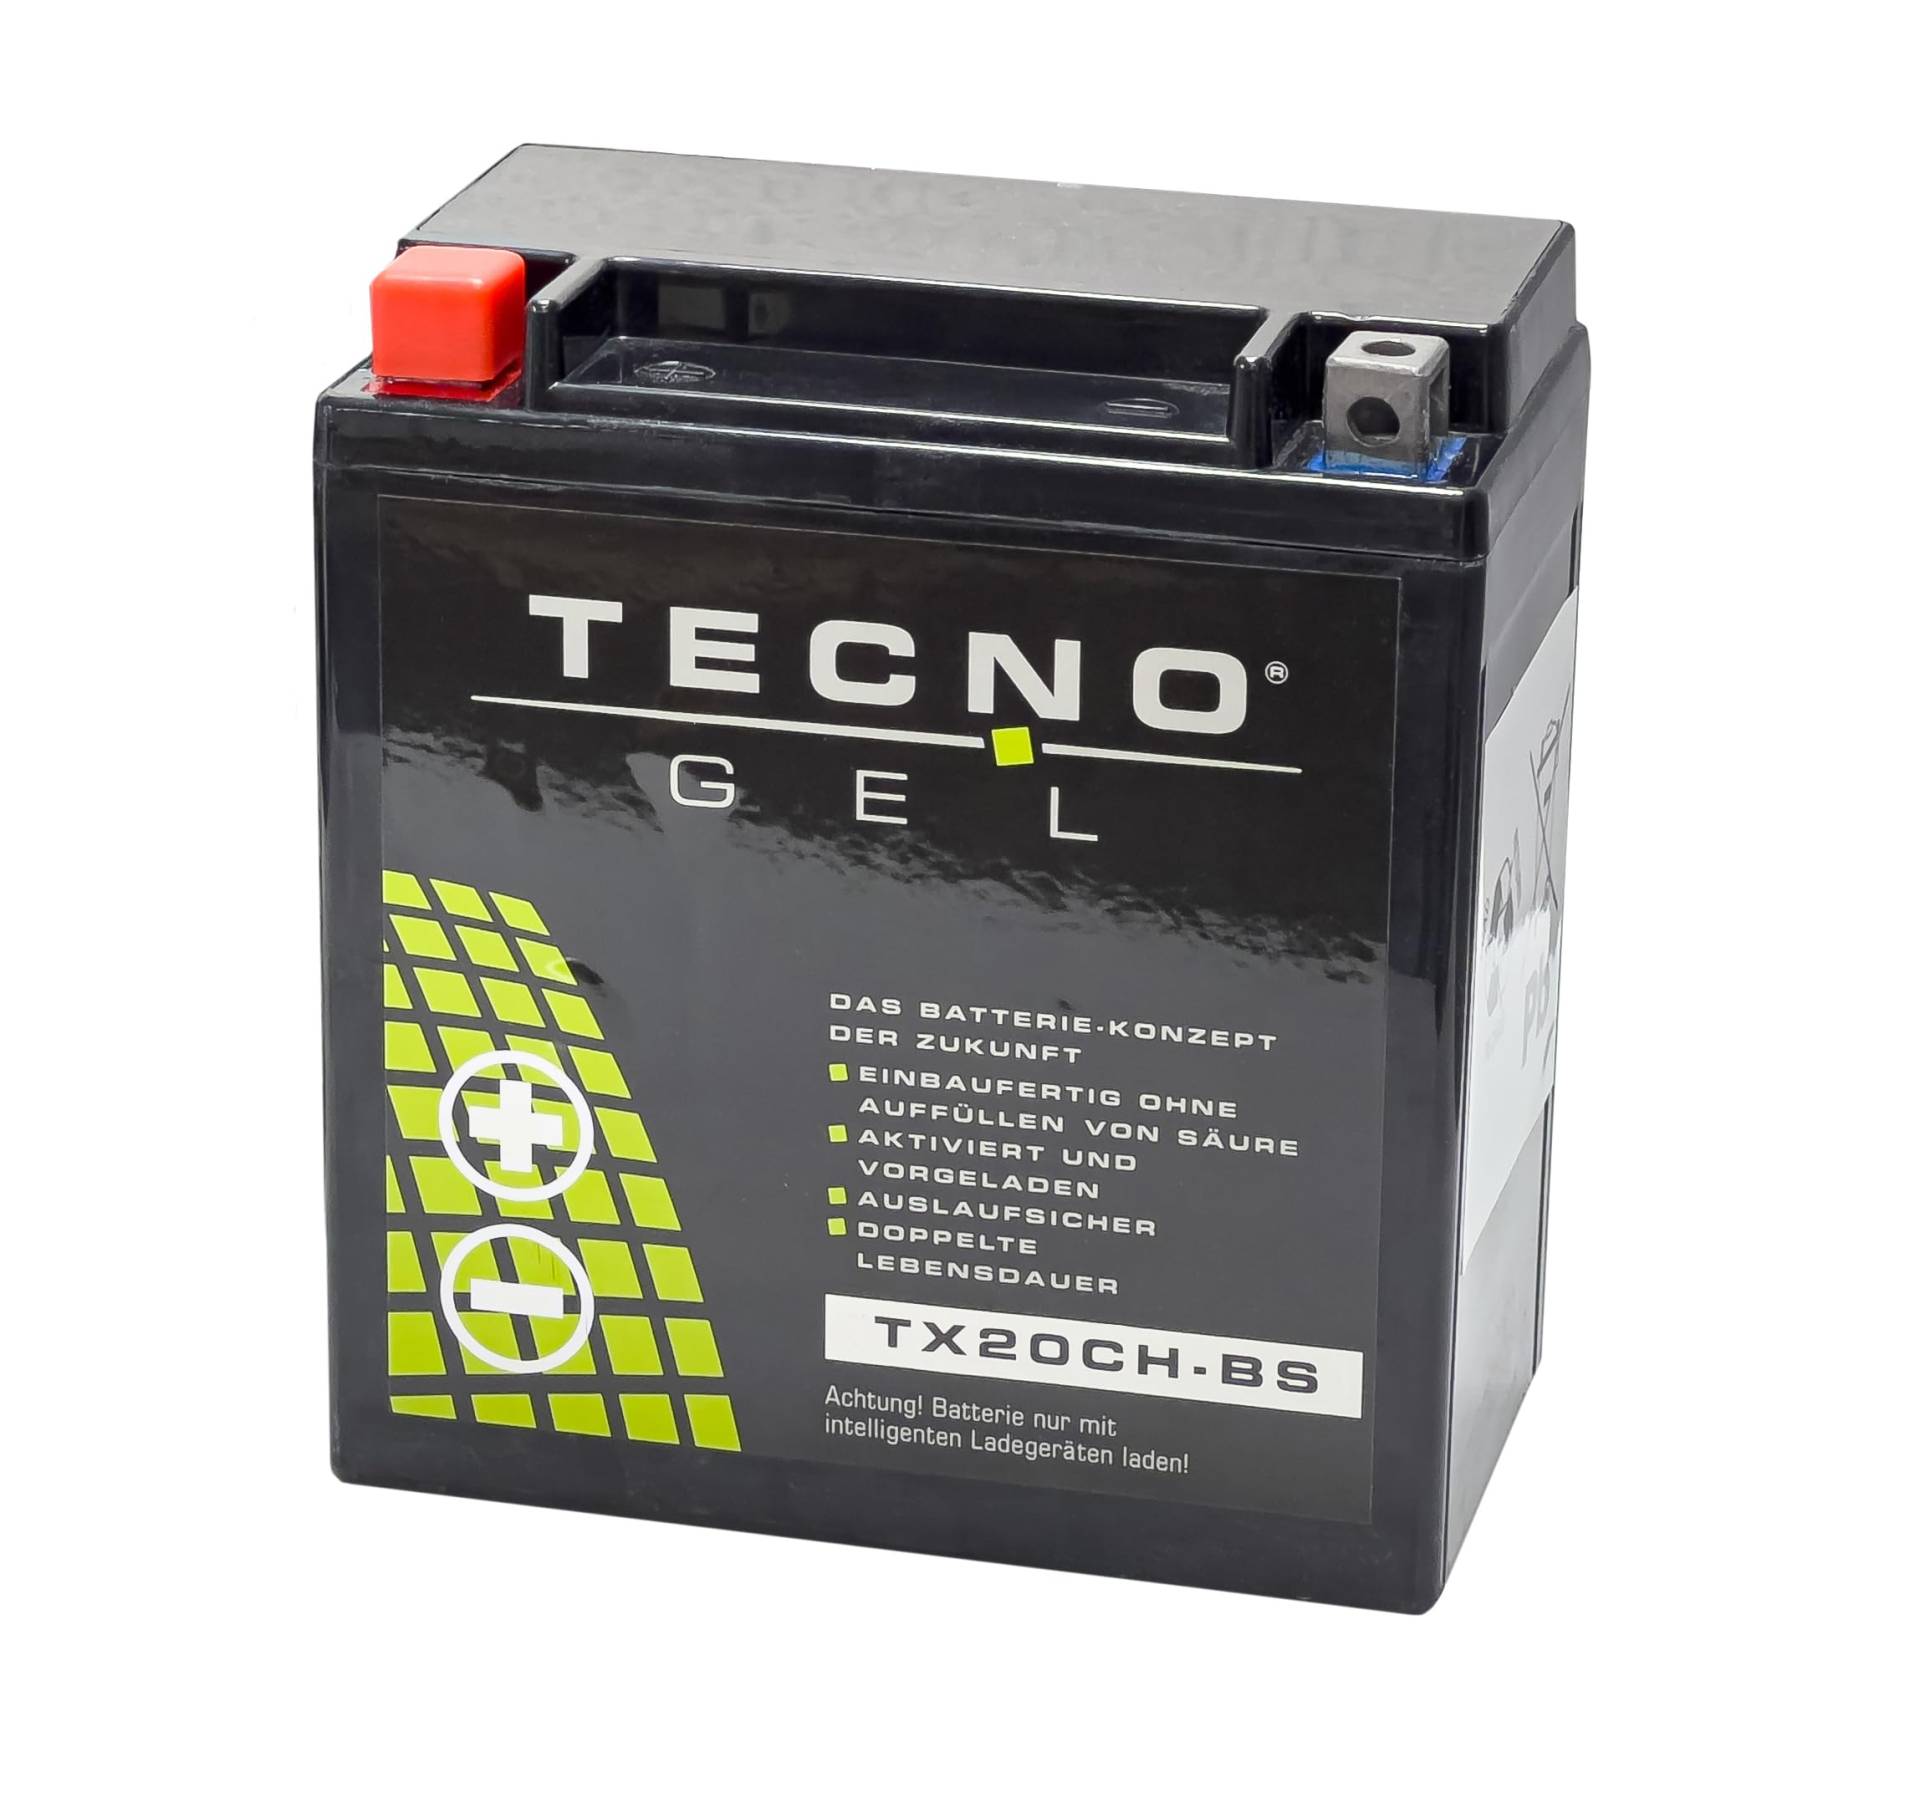 TECNO-GEL Motorrad-Batterie für YTX20CH-BS für KAWASAKI VN 2000 A, H, Classic 2004-2010, 12V Gel-Batterie 18AH, 150x87x161 mm von Wirth-Federn